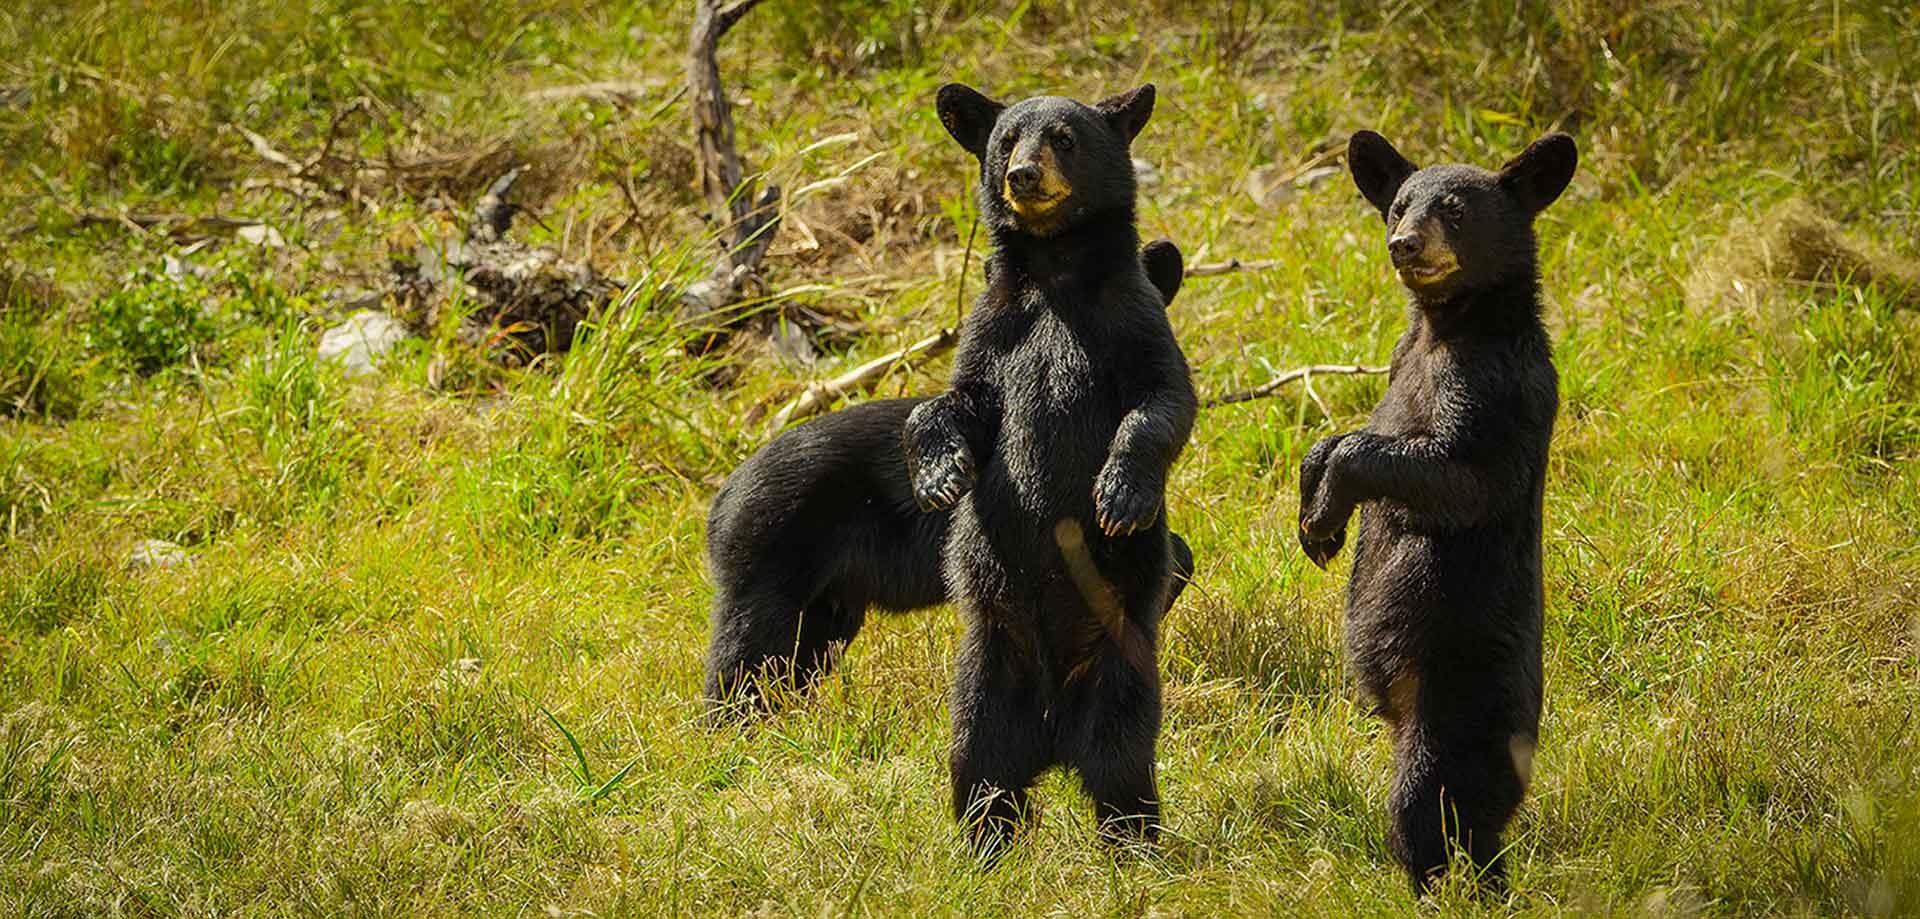 Mexican black bears